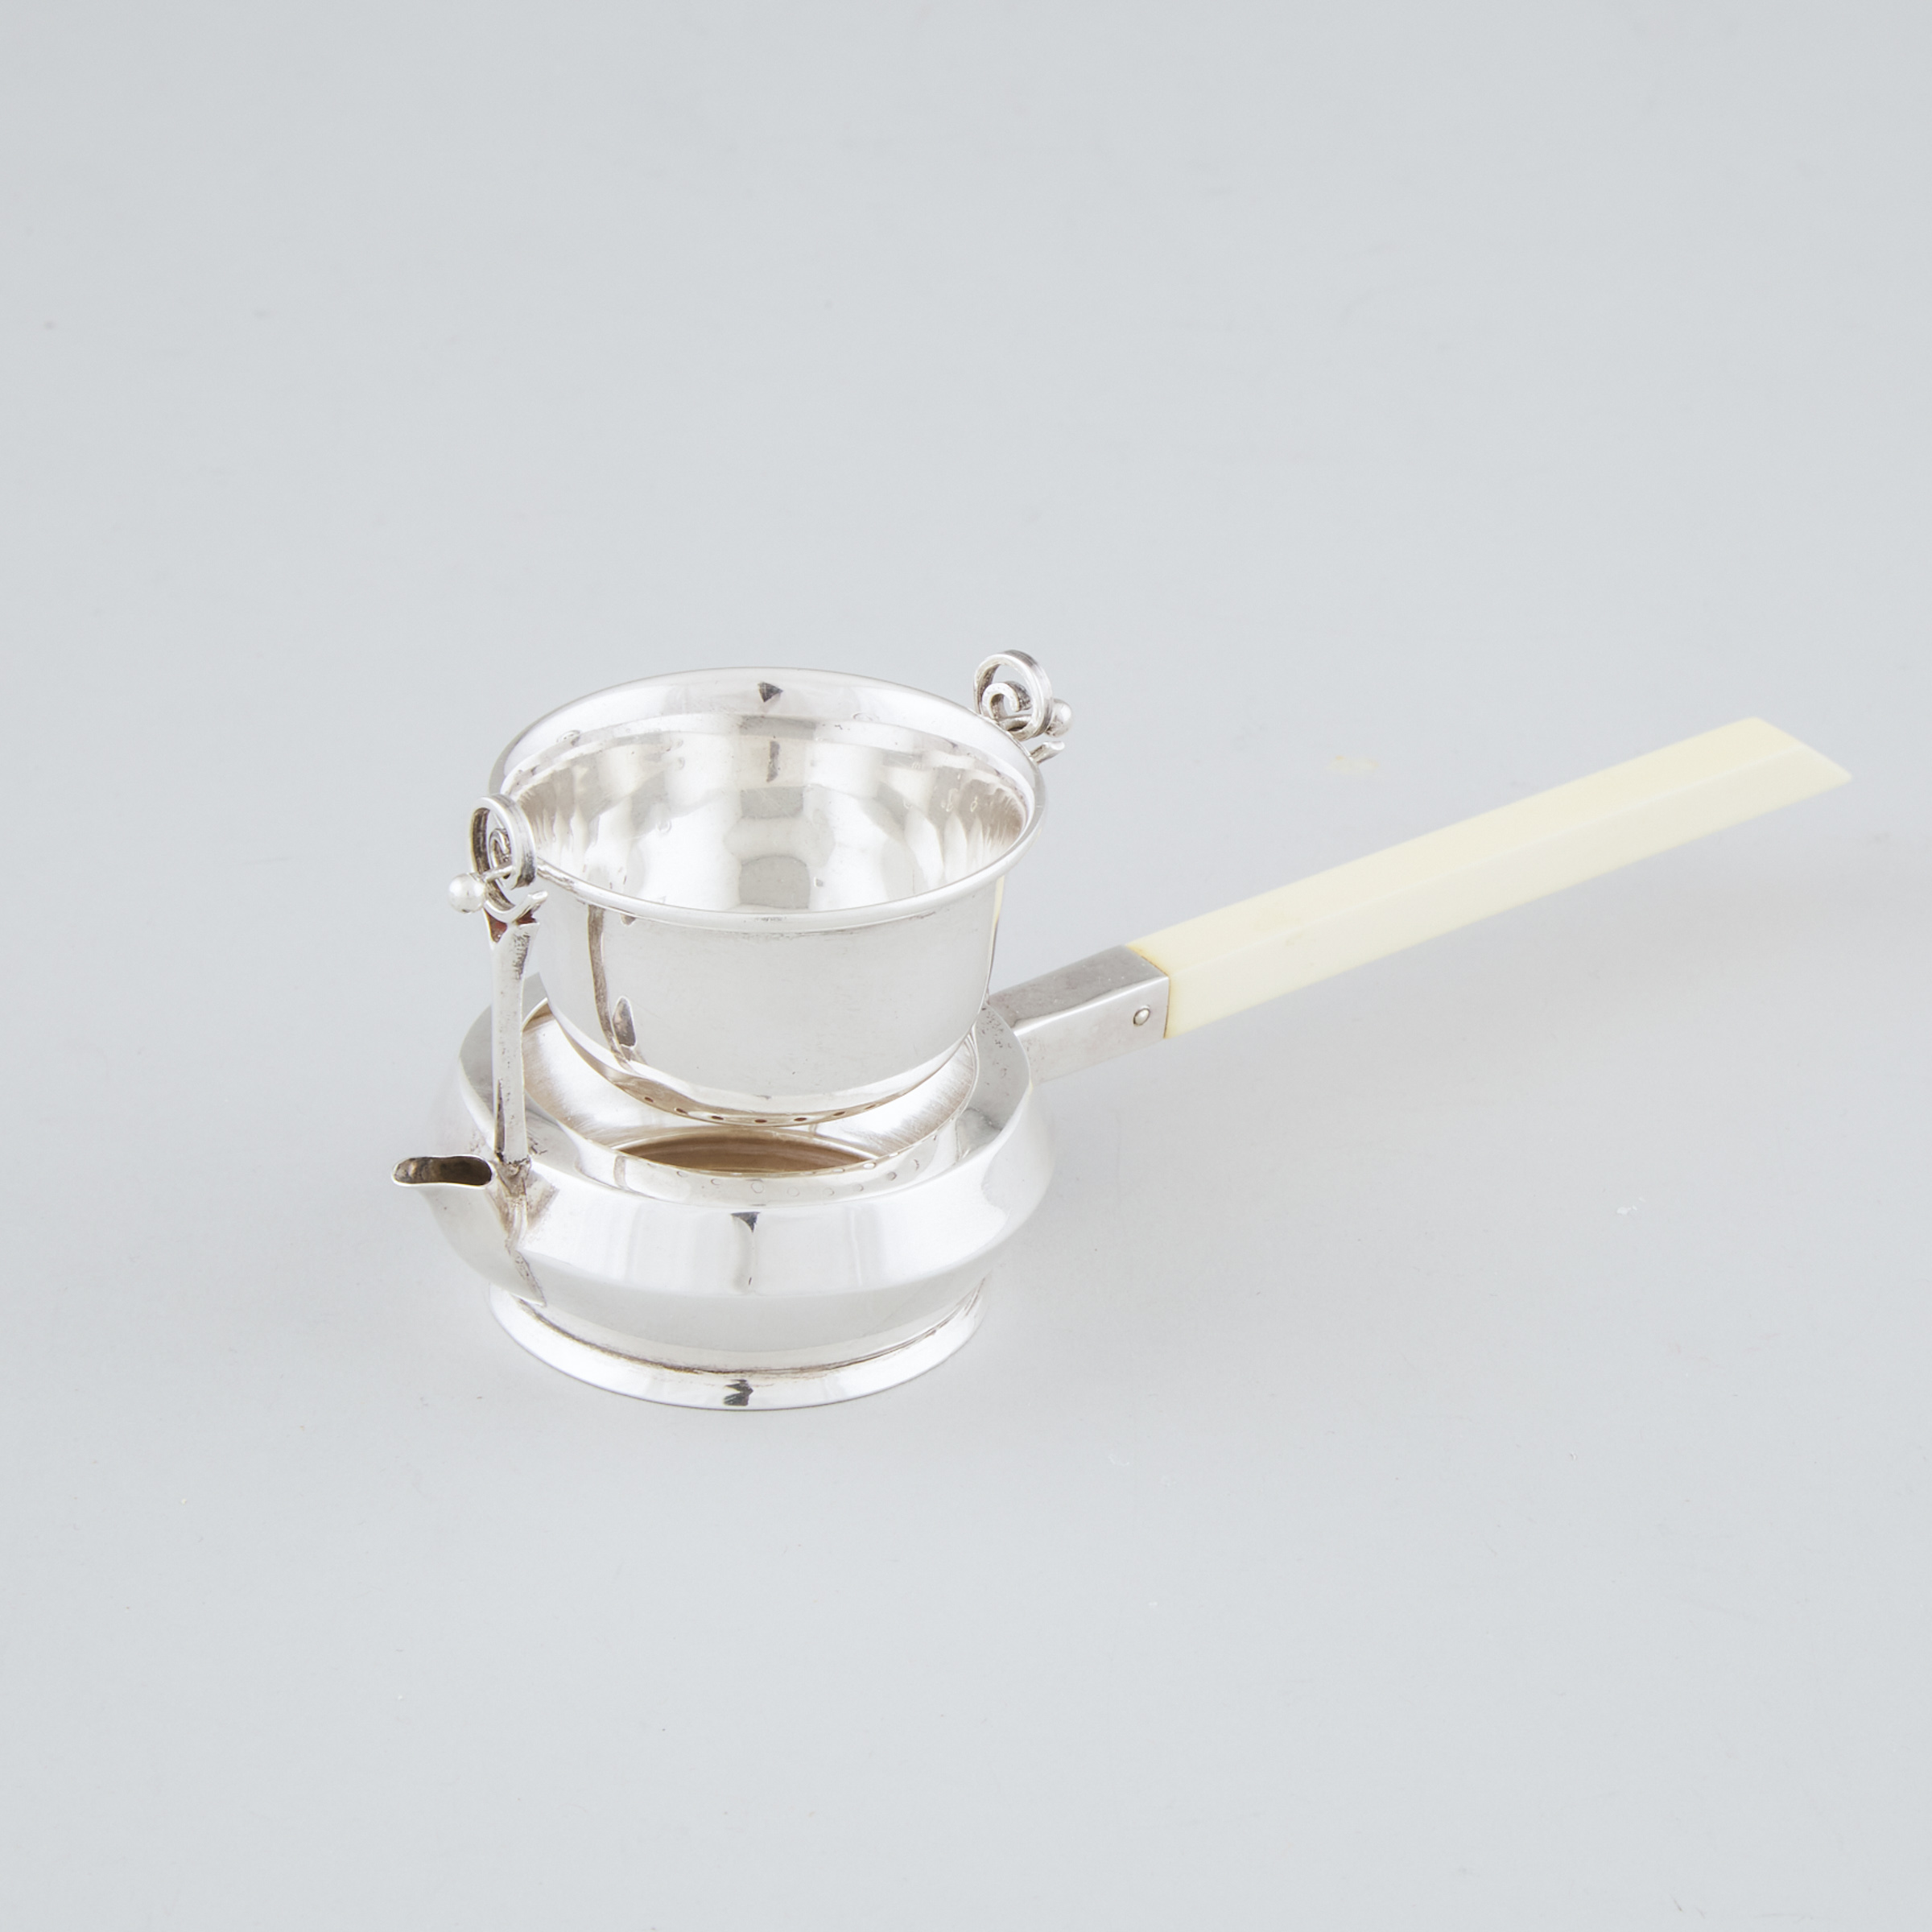 English Silver Tea Strainer Goldmiths 2f2501